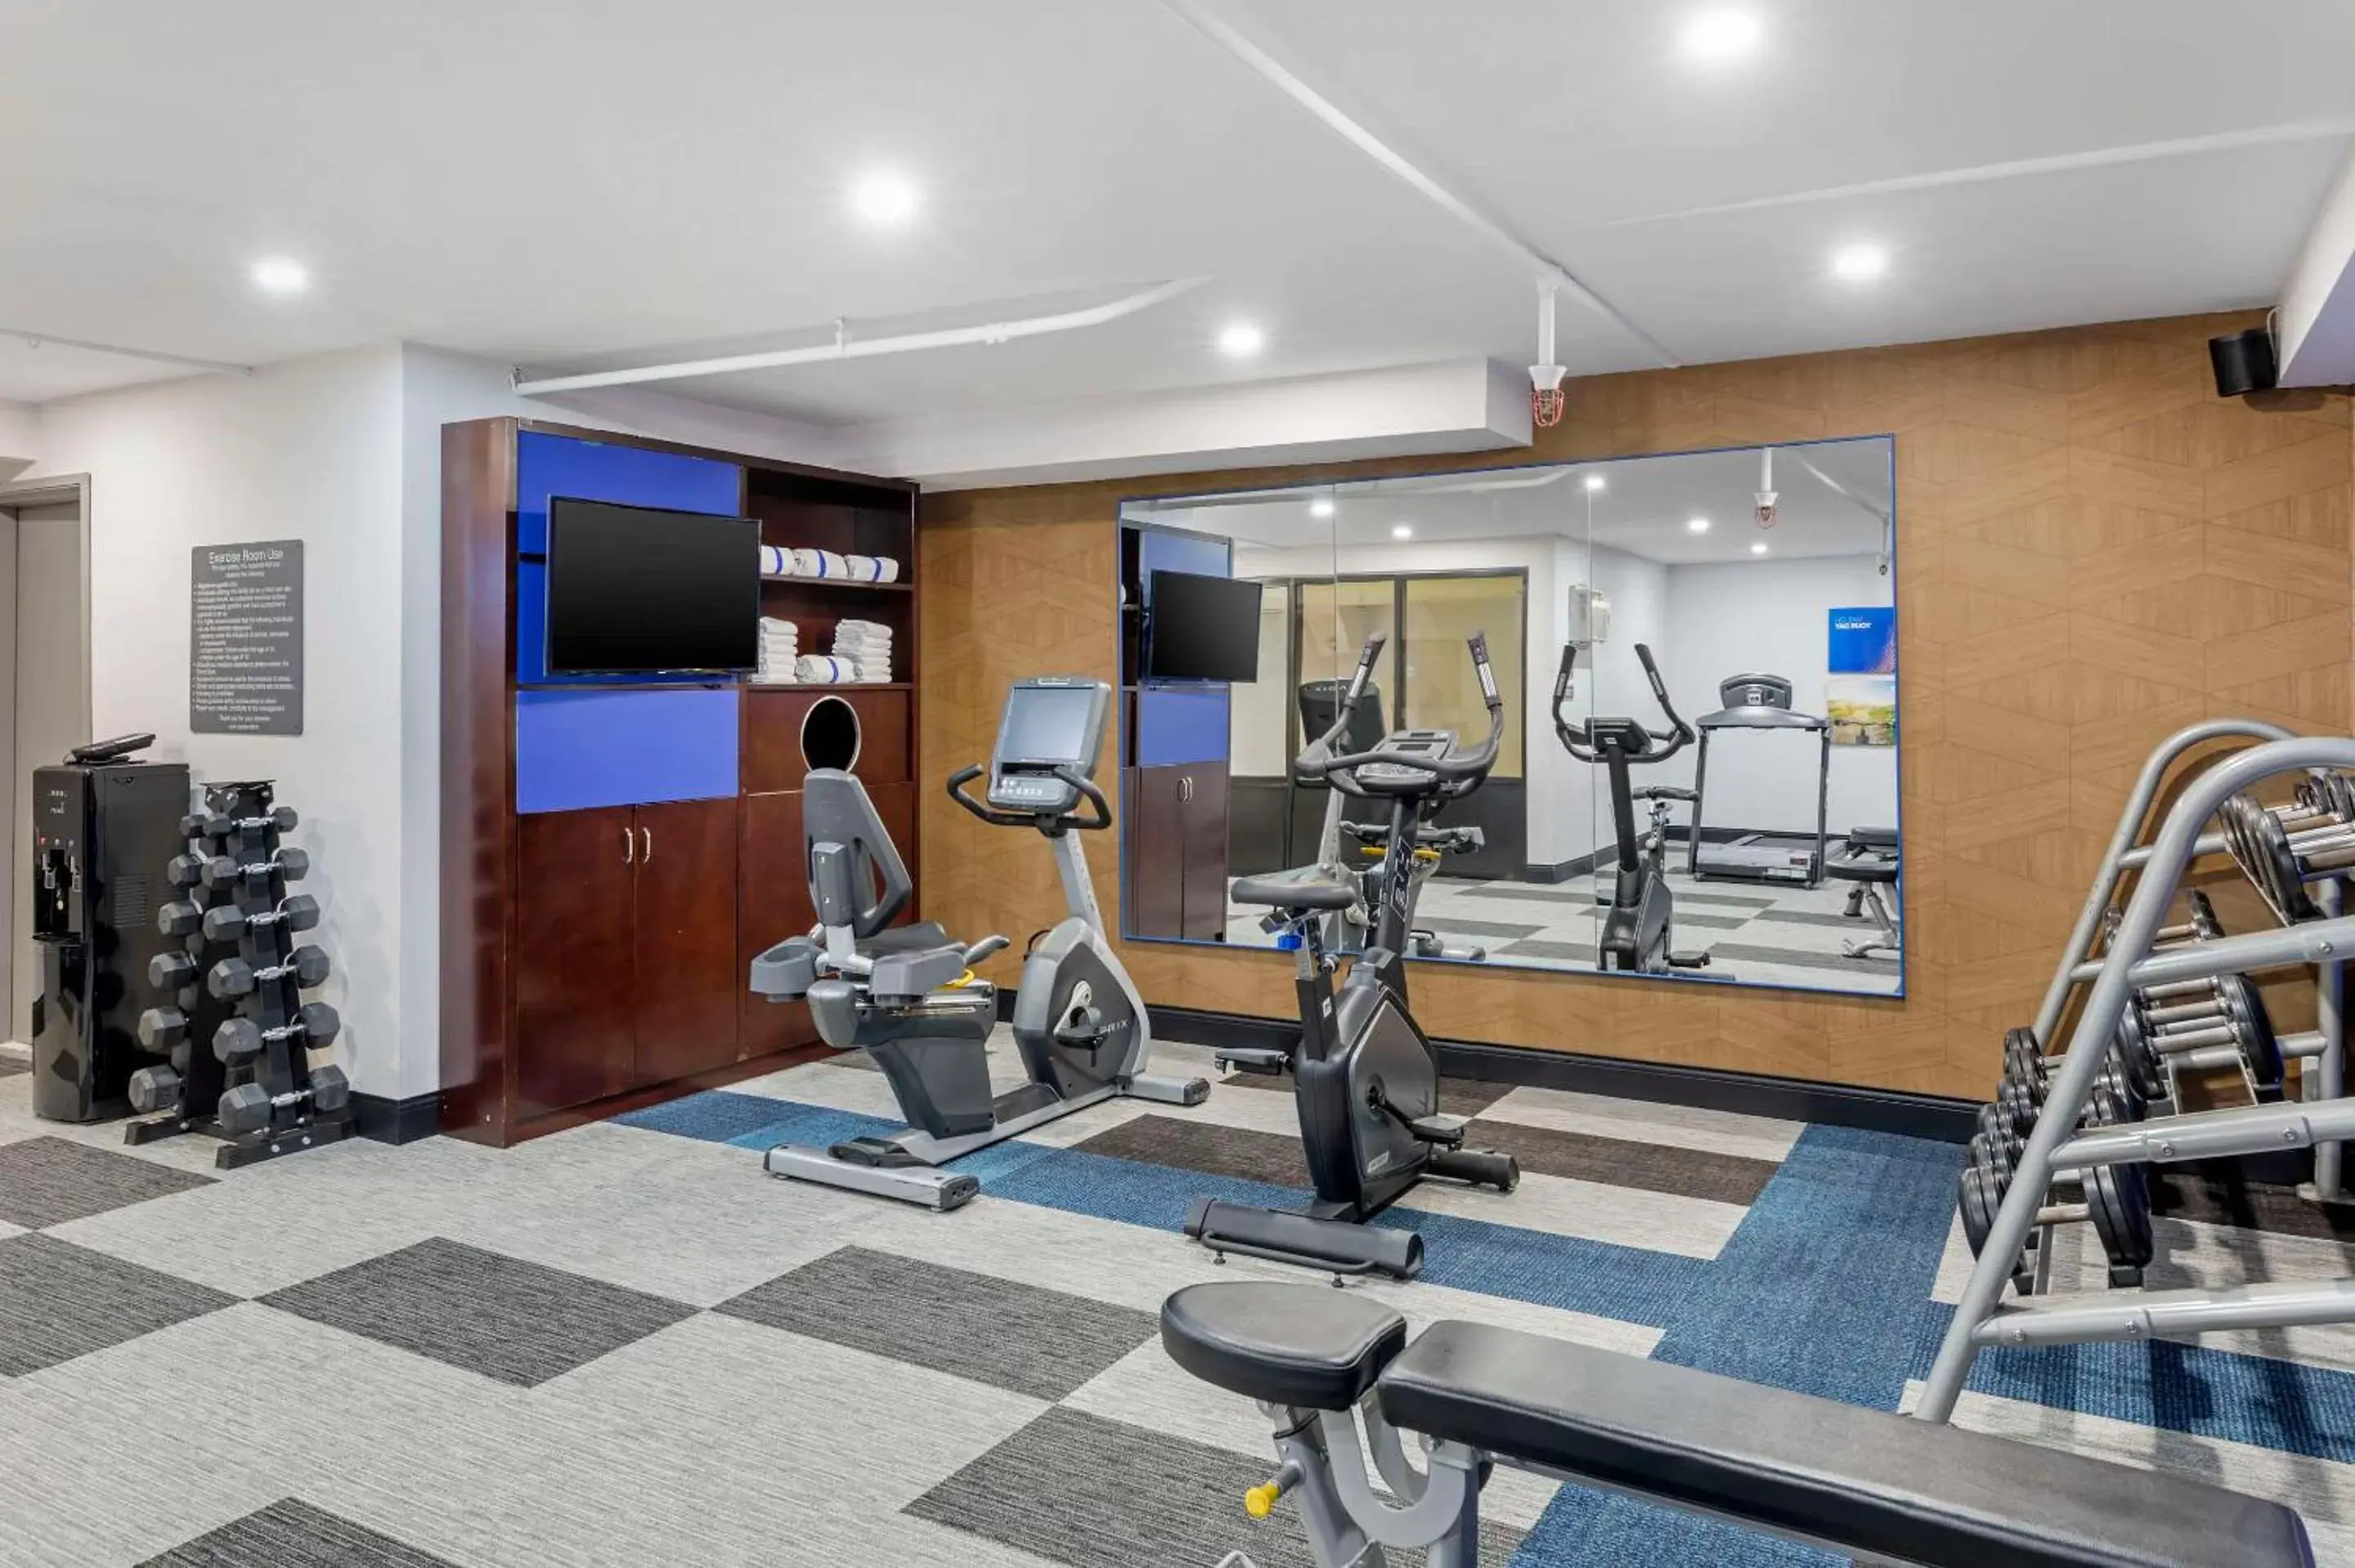 Fitness centre/facilities, Fitness Center/Facilities in Quality Inn & Suites Irvine Spectrum